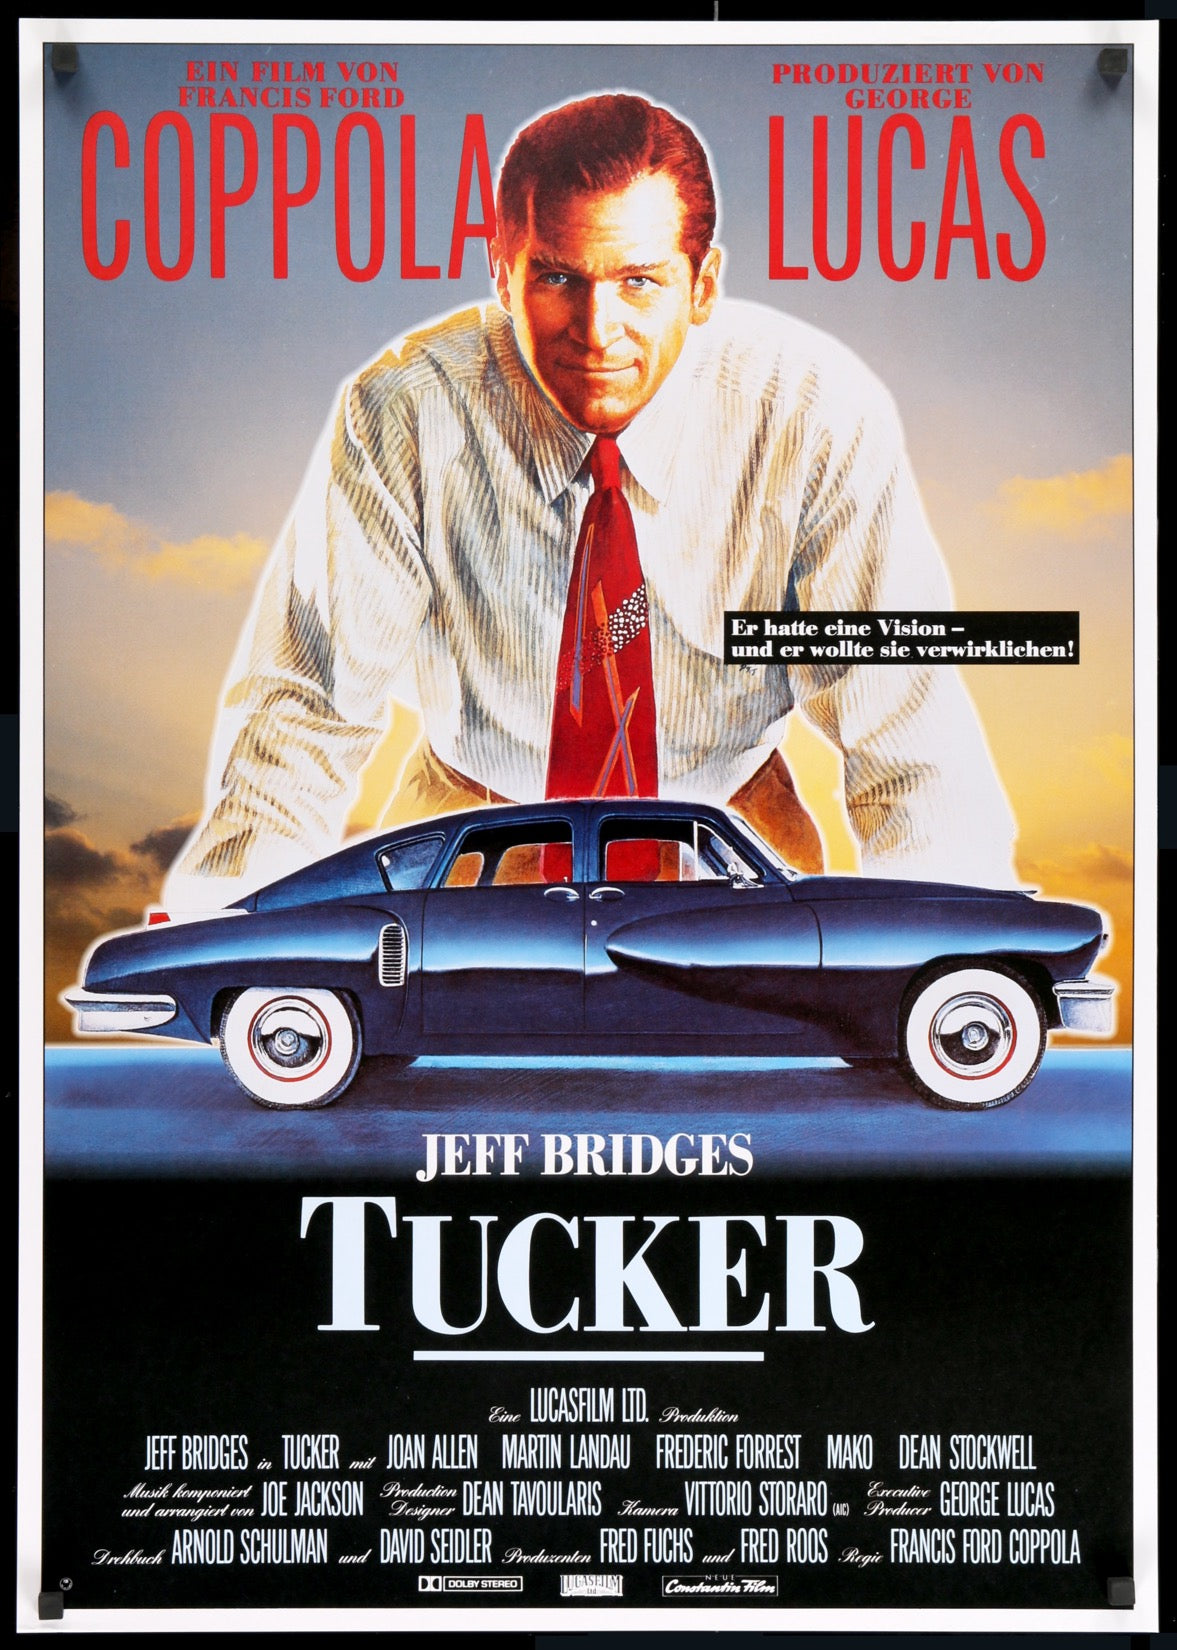 Tucker: The Man and His Dream (1988) original movie poster for sale at Original Film Art